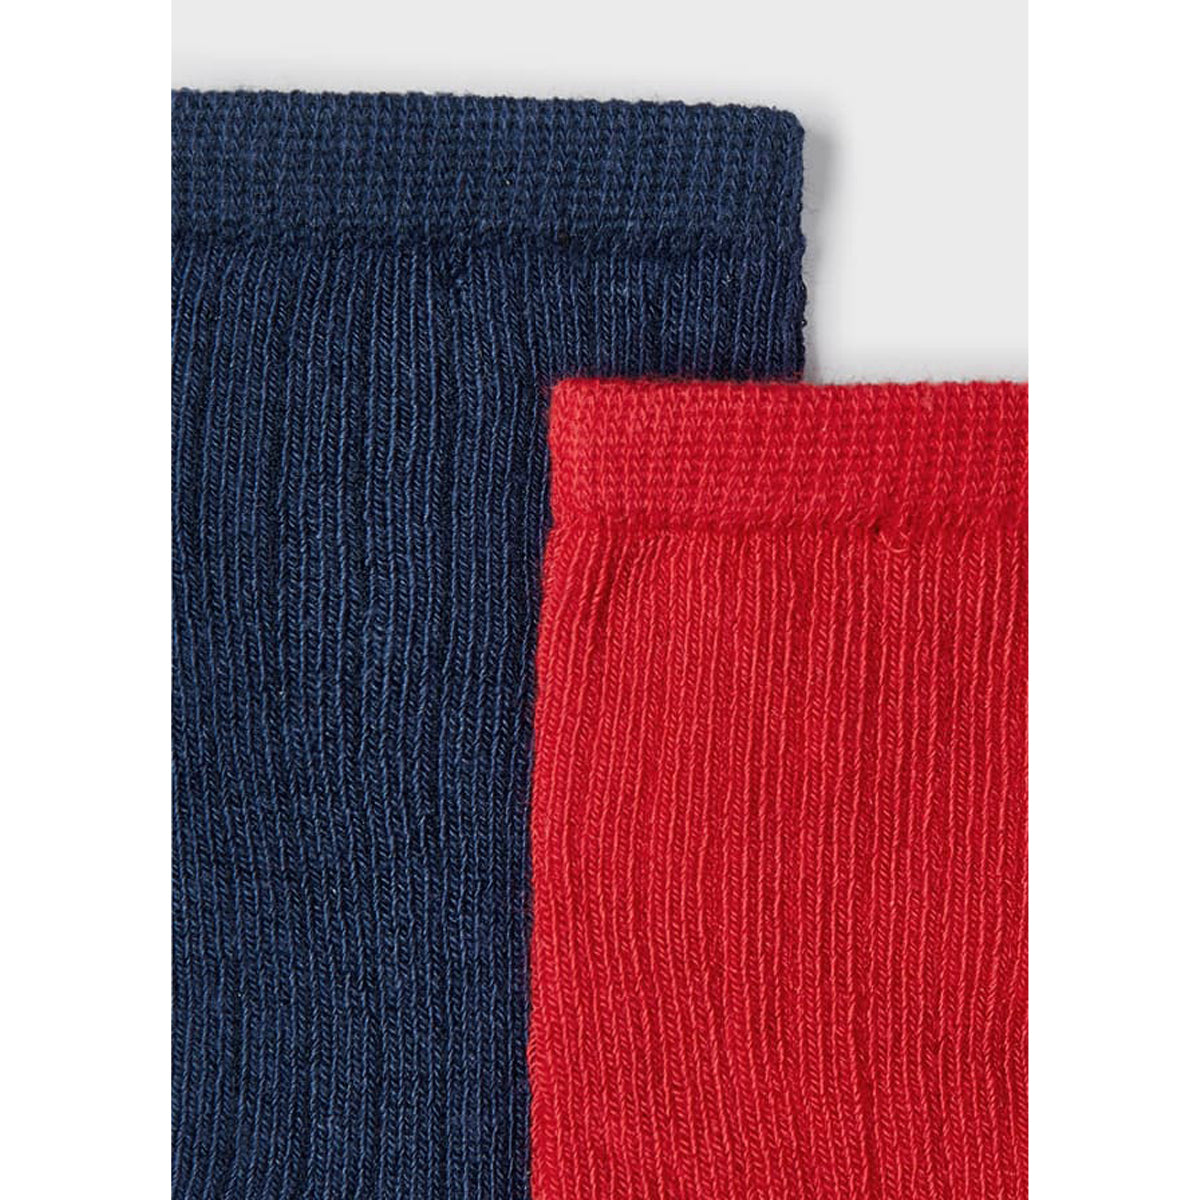 Ecofriends Navy Blue & Red Dressy Sock Set